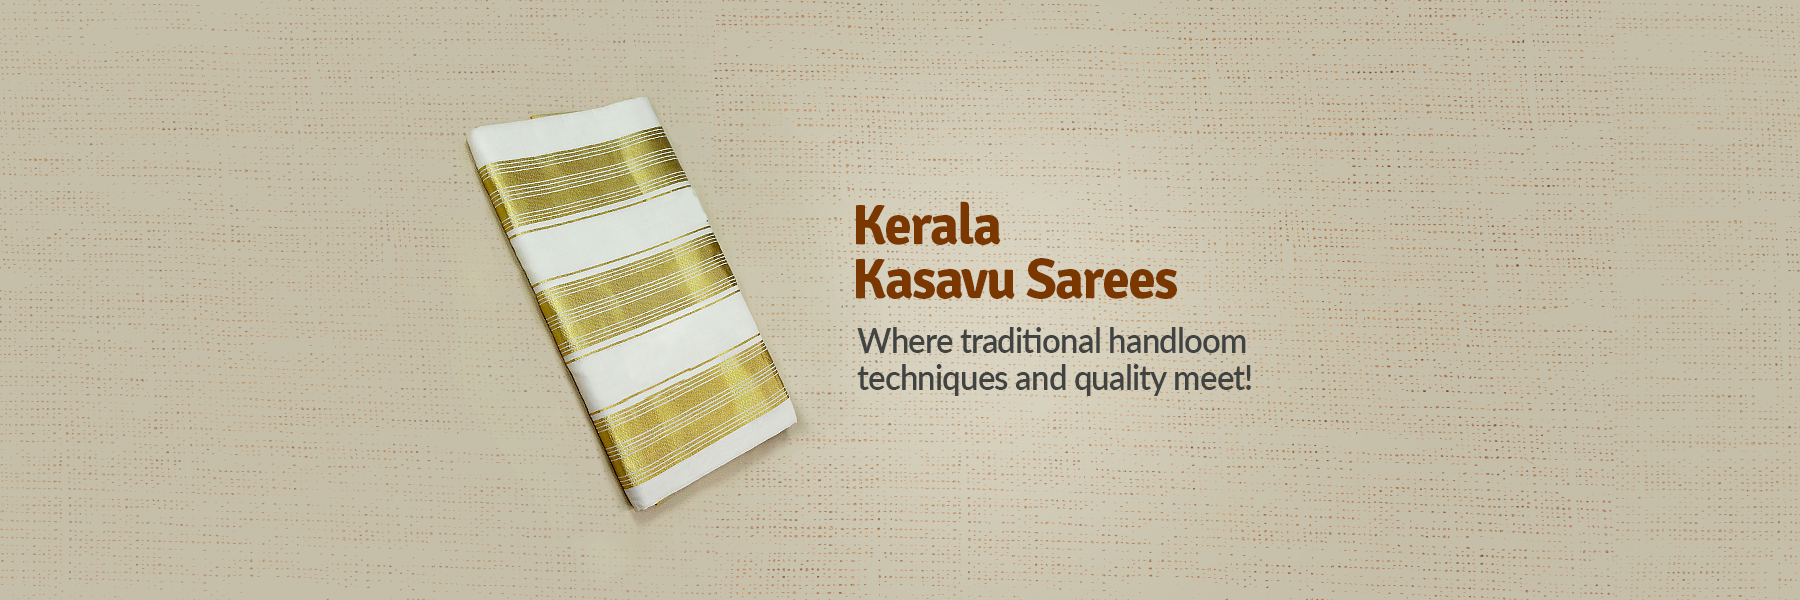 Kerala Kasavu Sarees from Kuthampally FromIndia.com